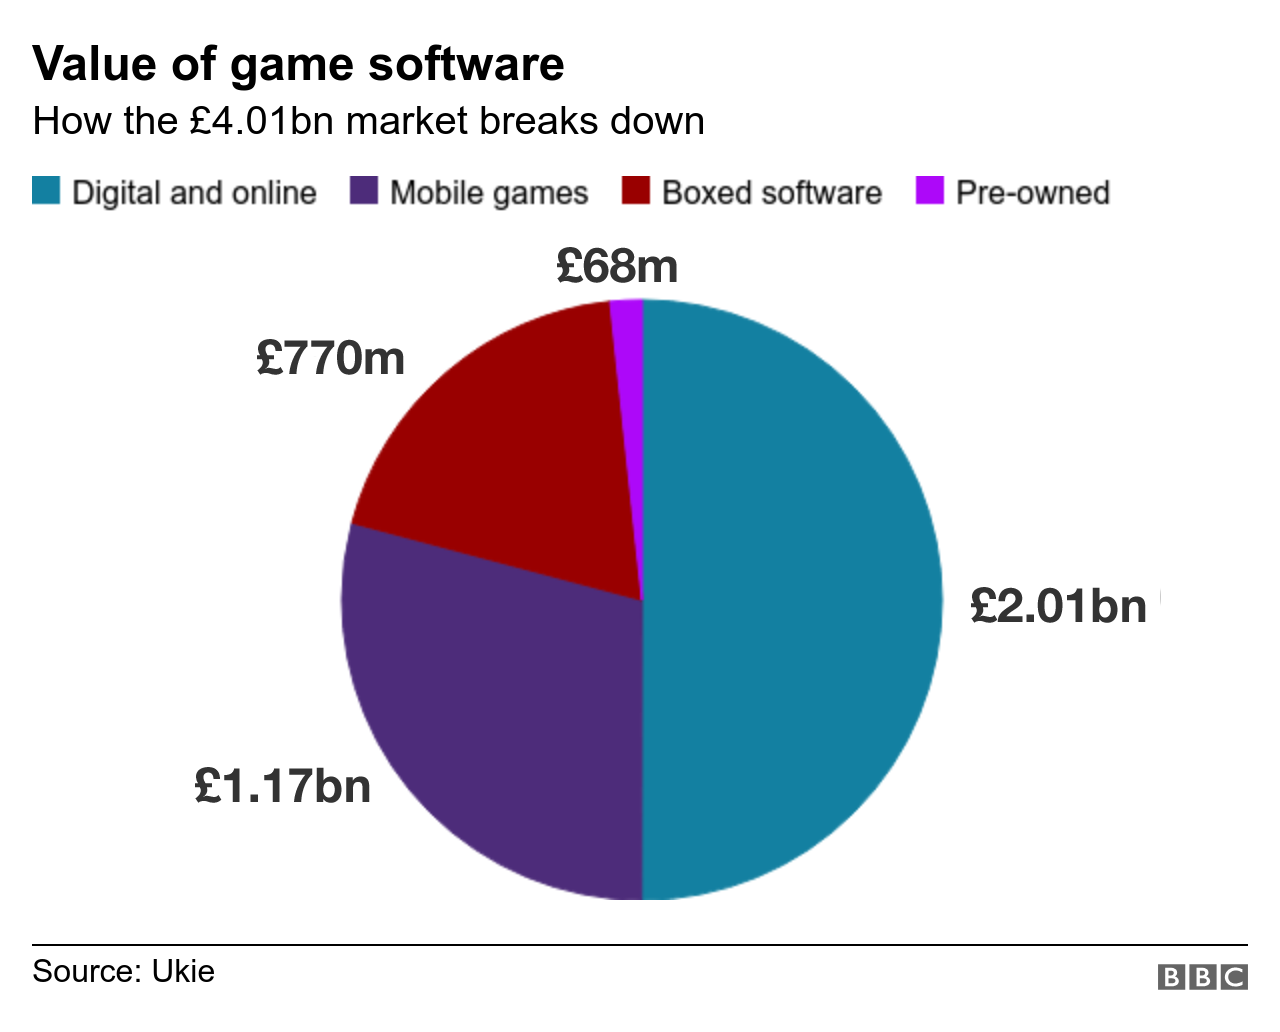 Graphic: Breakdown of software market value